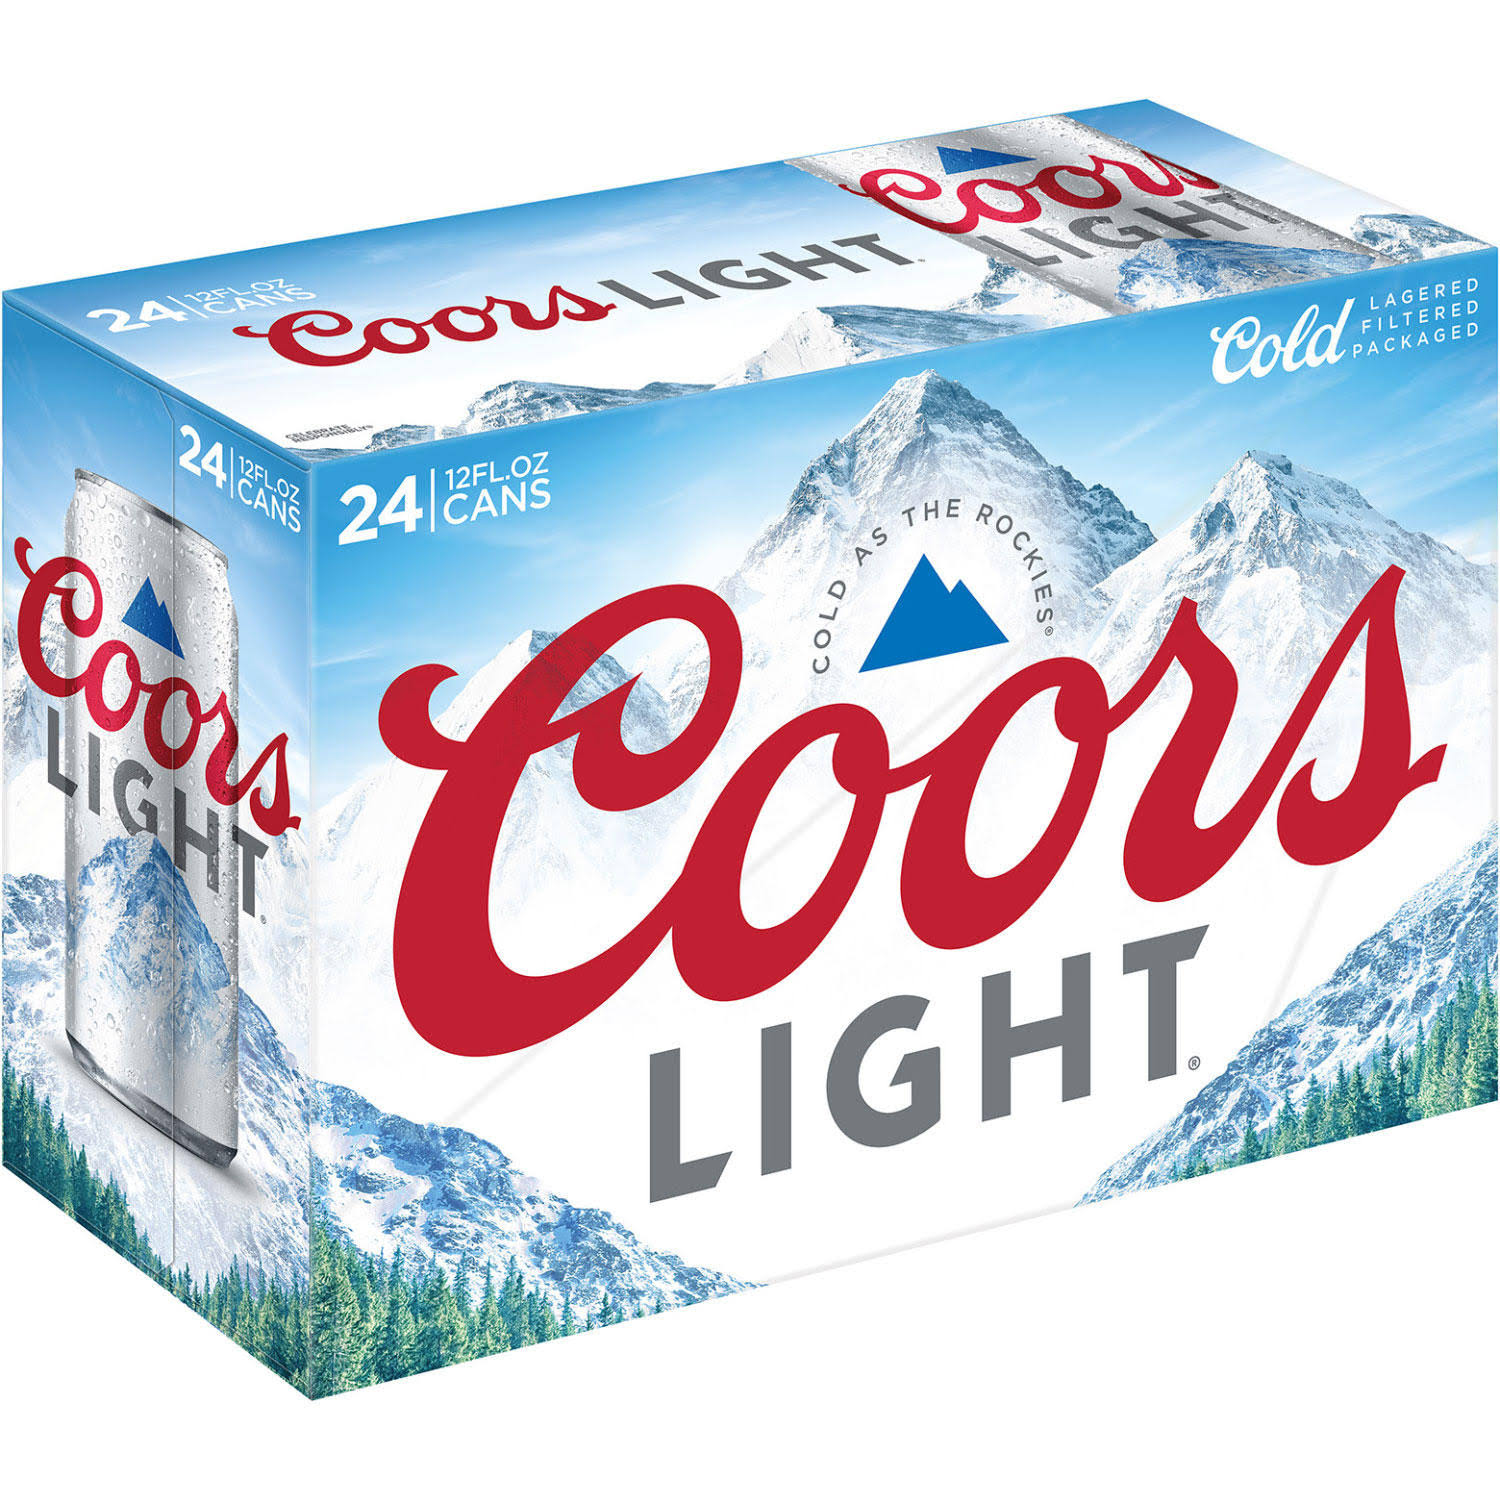 Coors Light Beer - 12 pack, 12 fl oz cans